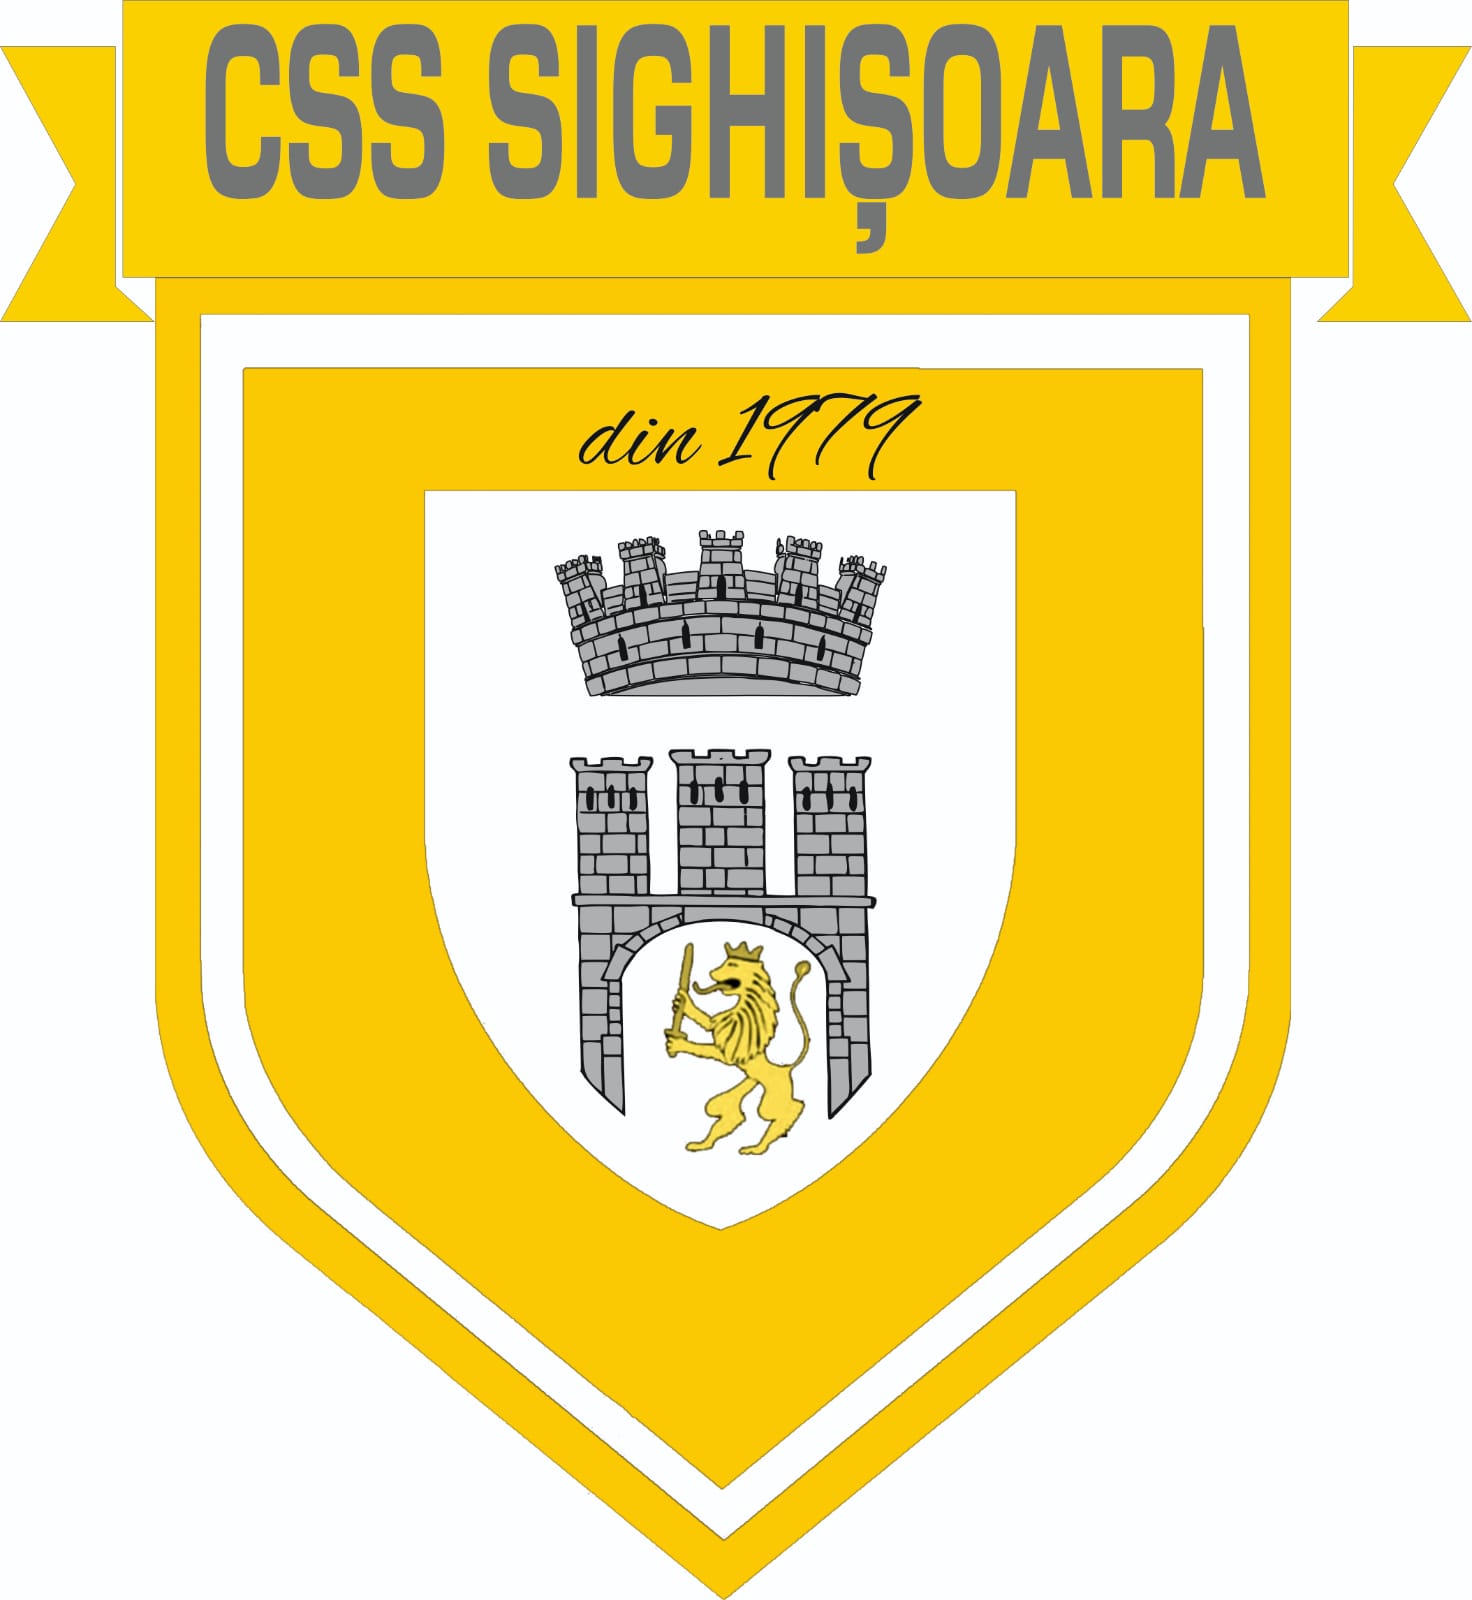 C.S.S. SIGHISOARA